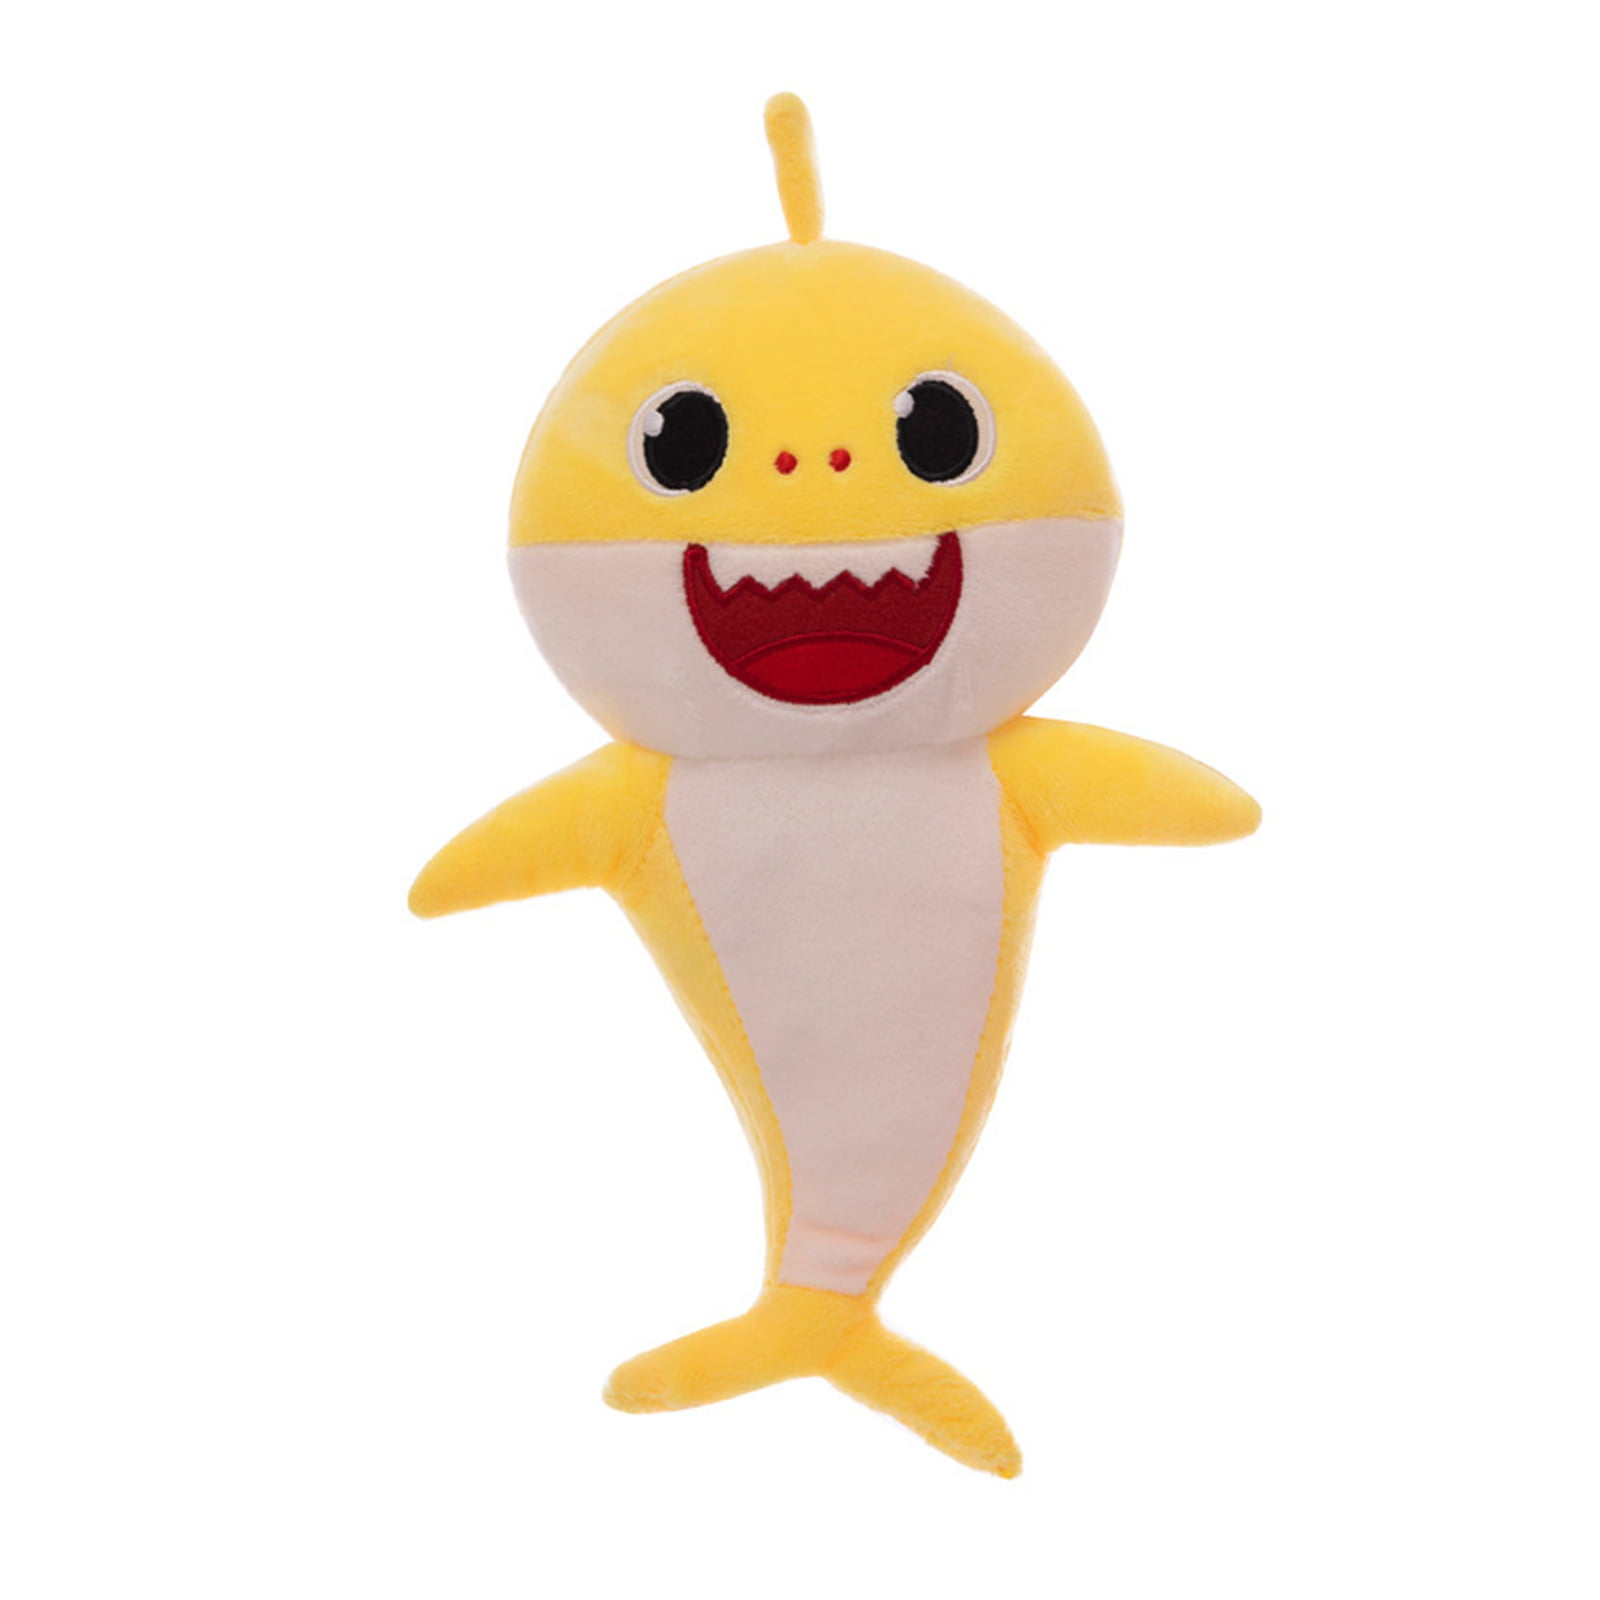 Baby Shark Yellow Plush Toys Doll Kids Gift Toy Stuffed Animal New 